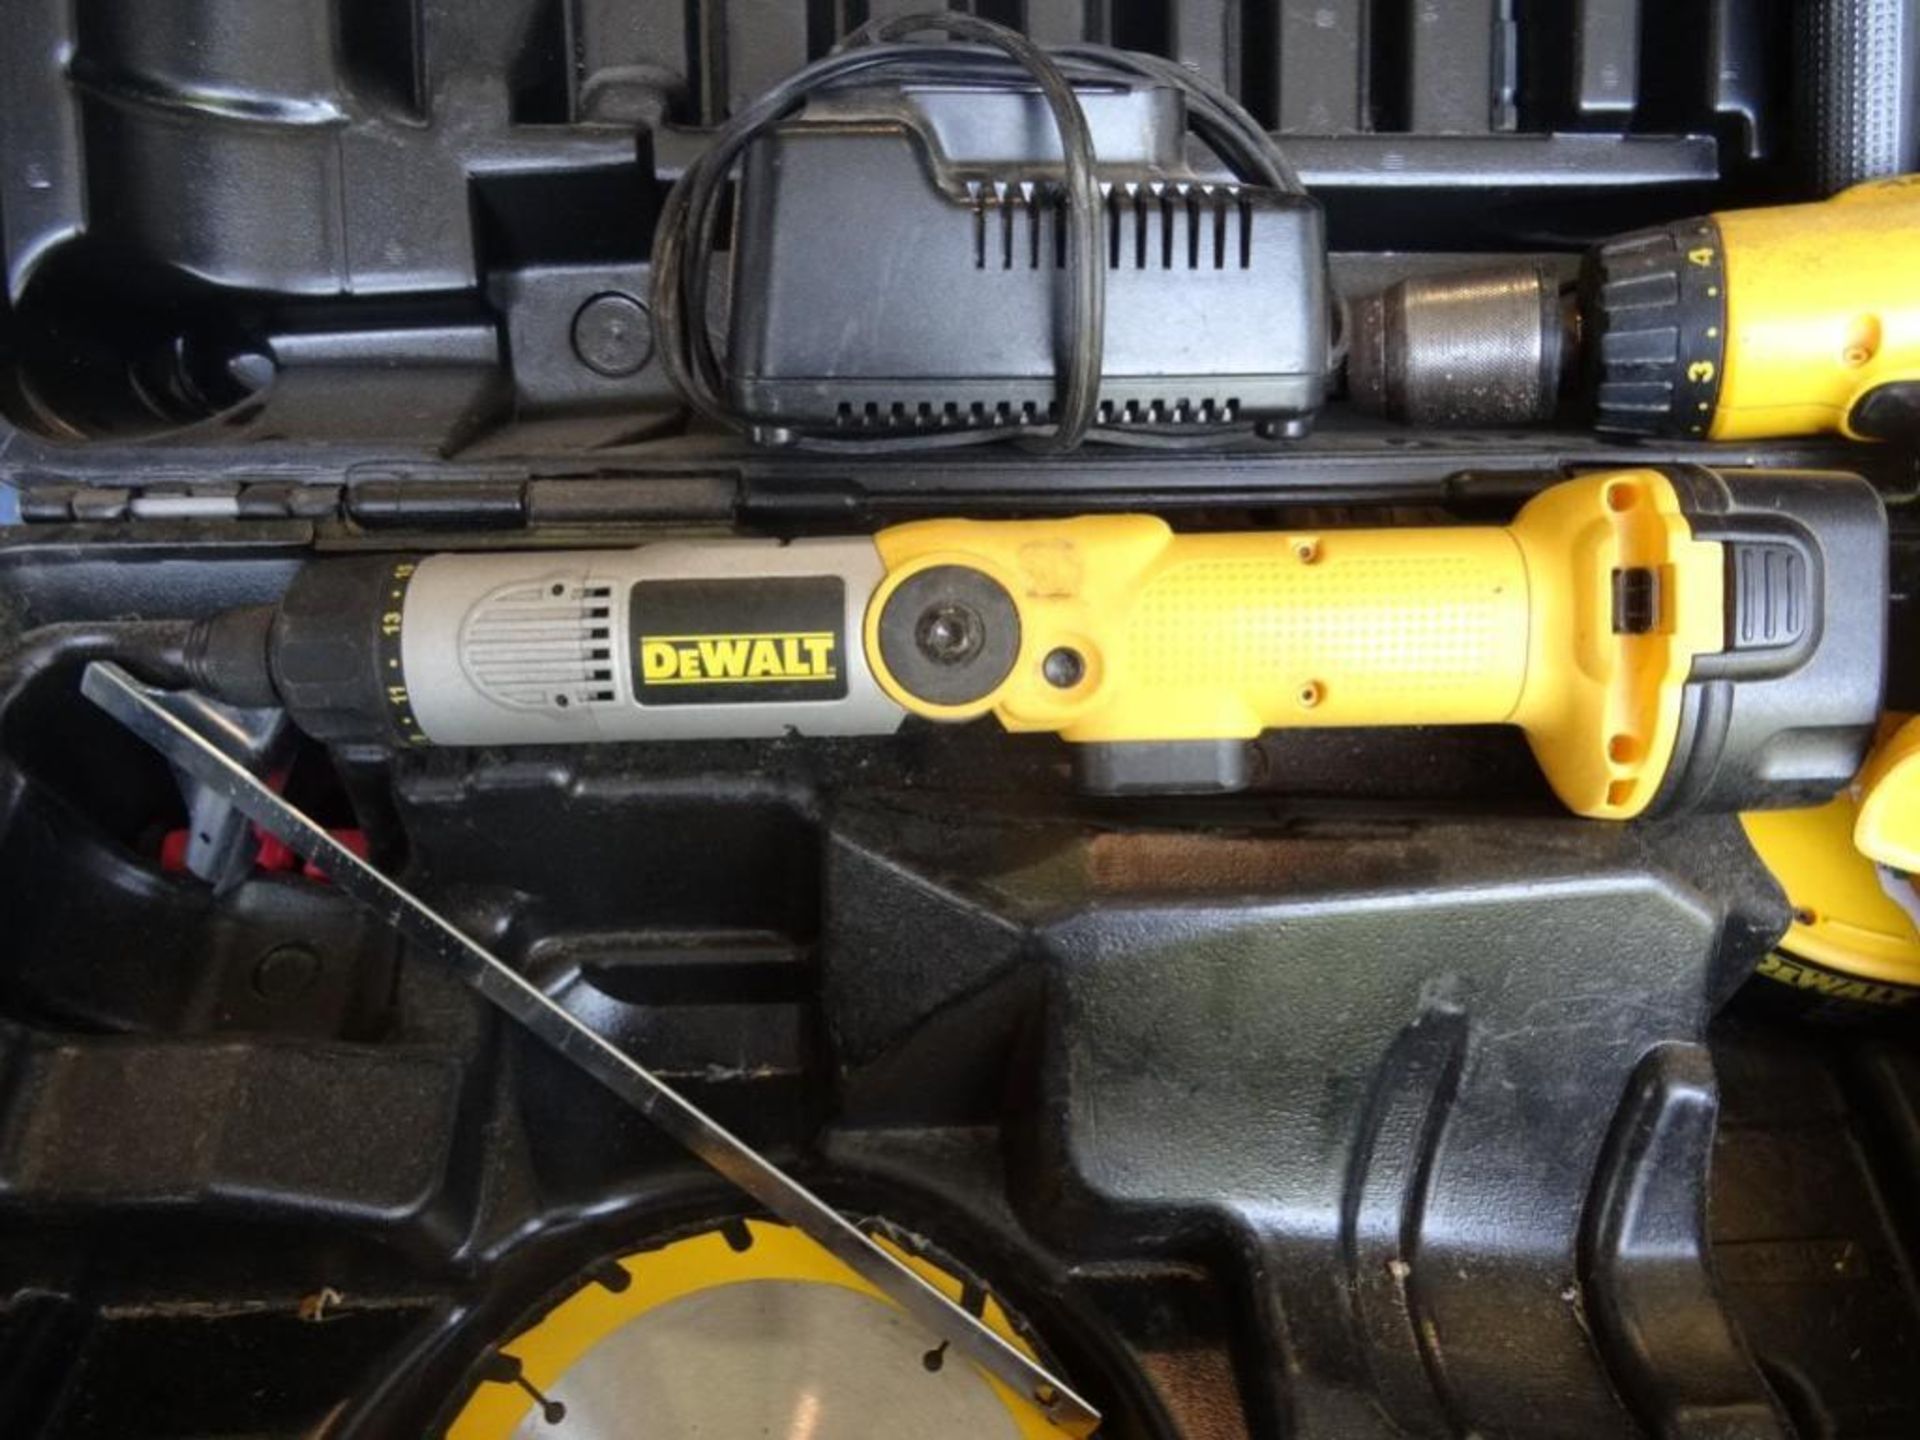 Dewalt Cordless Power Tool Set - Image 3 of 6